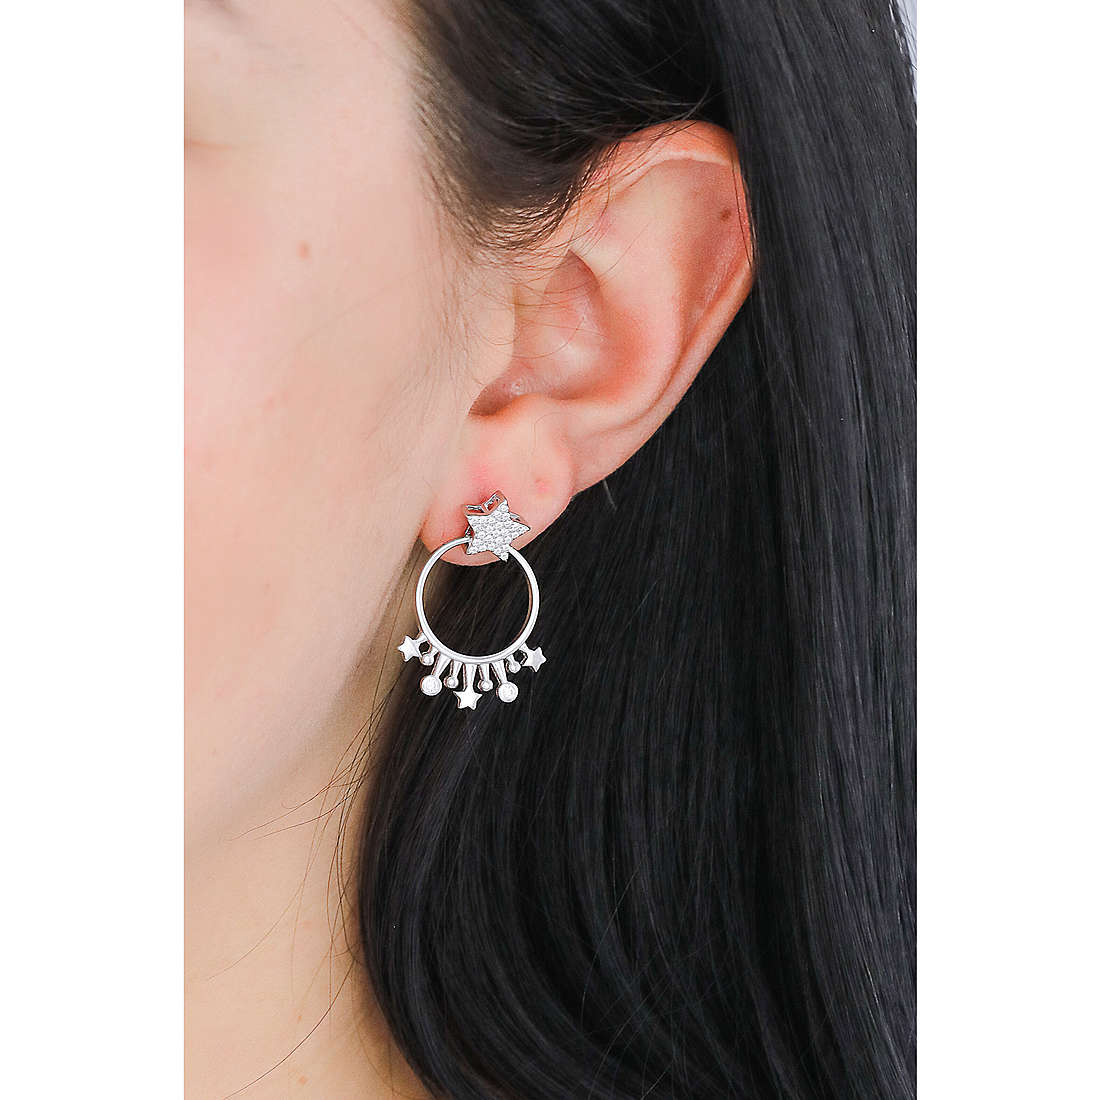 GioiaPura earrings woman INS028OR776RHWH wearing